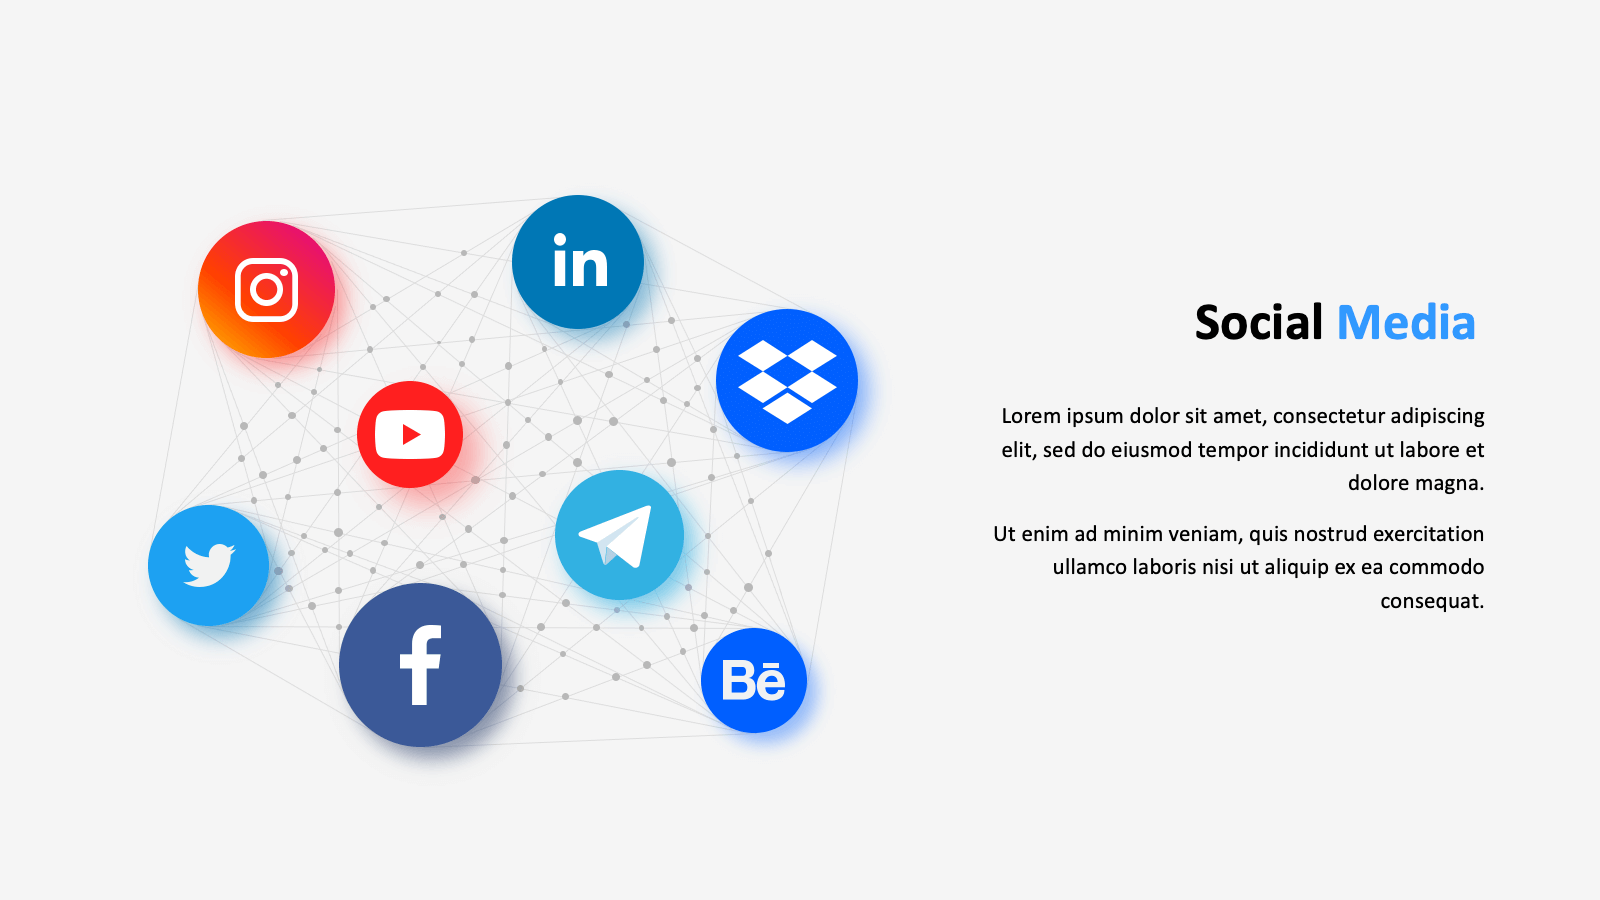 social media presentation pdf